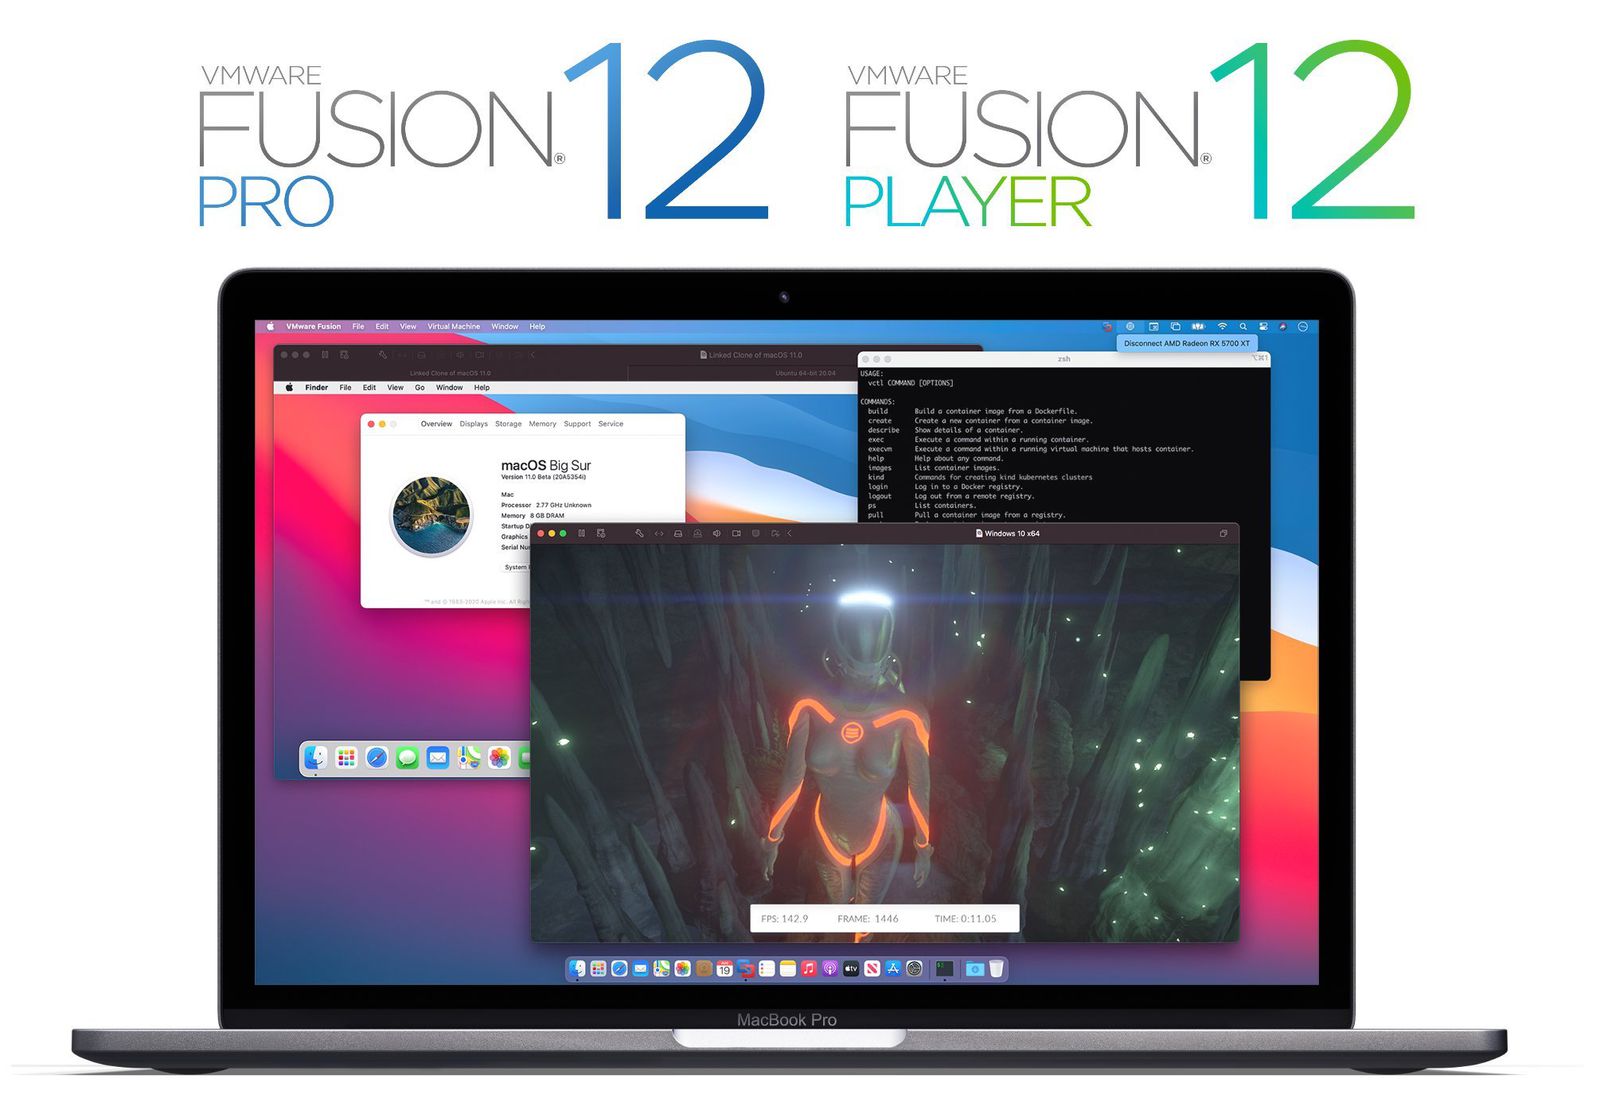 vmware fusion 10 for mac won